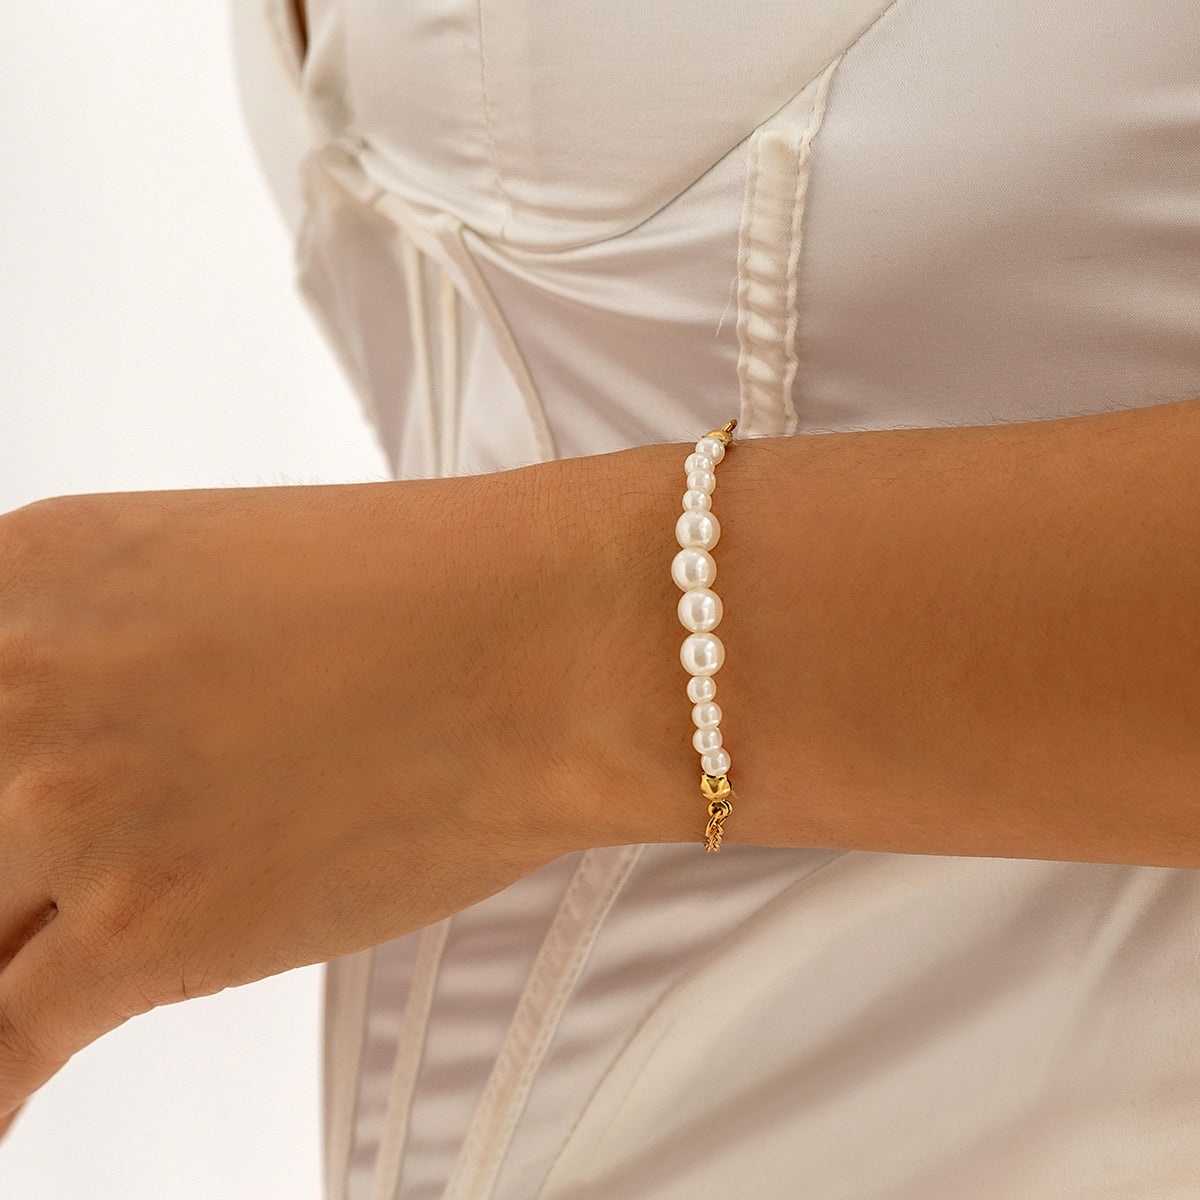 Maytrends Fashion Imitation Pearl Beads Metal Chain Bracelet For Women Elegant Simple Metal Bracelet Wedding Jewelry Gift